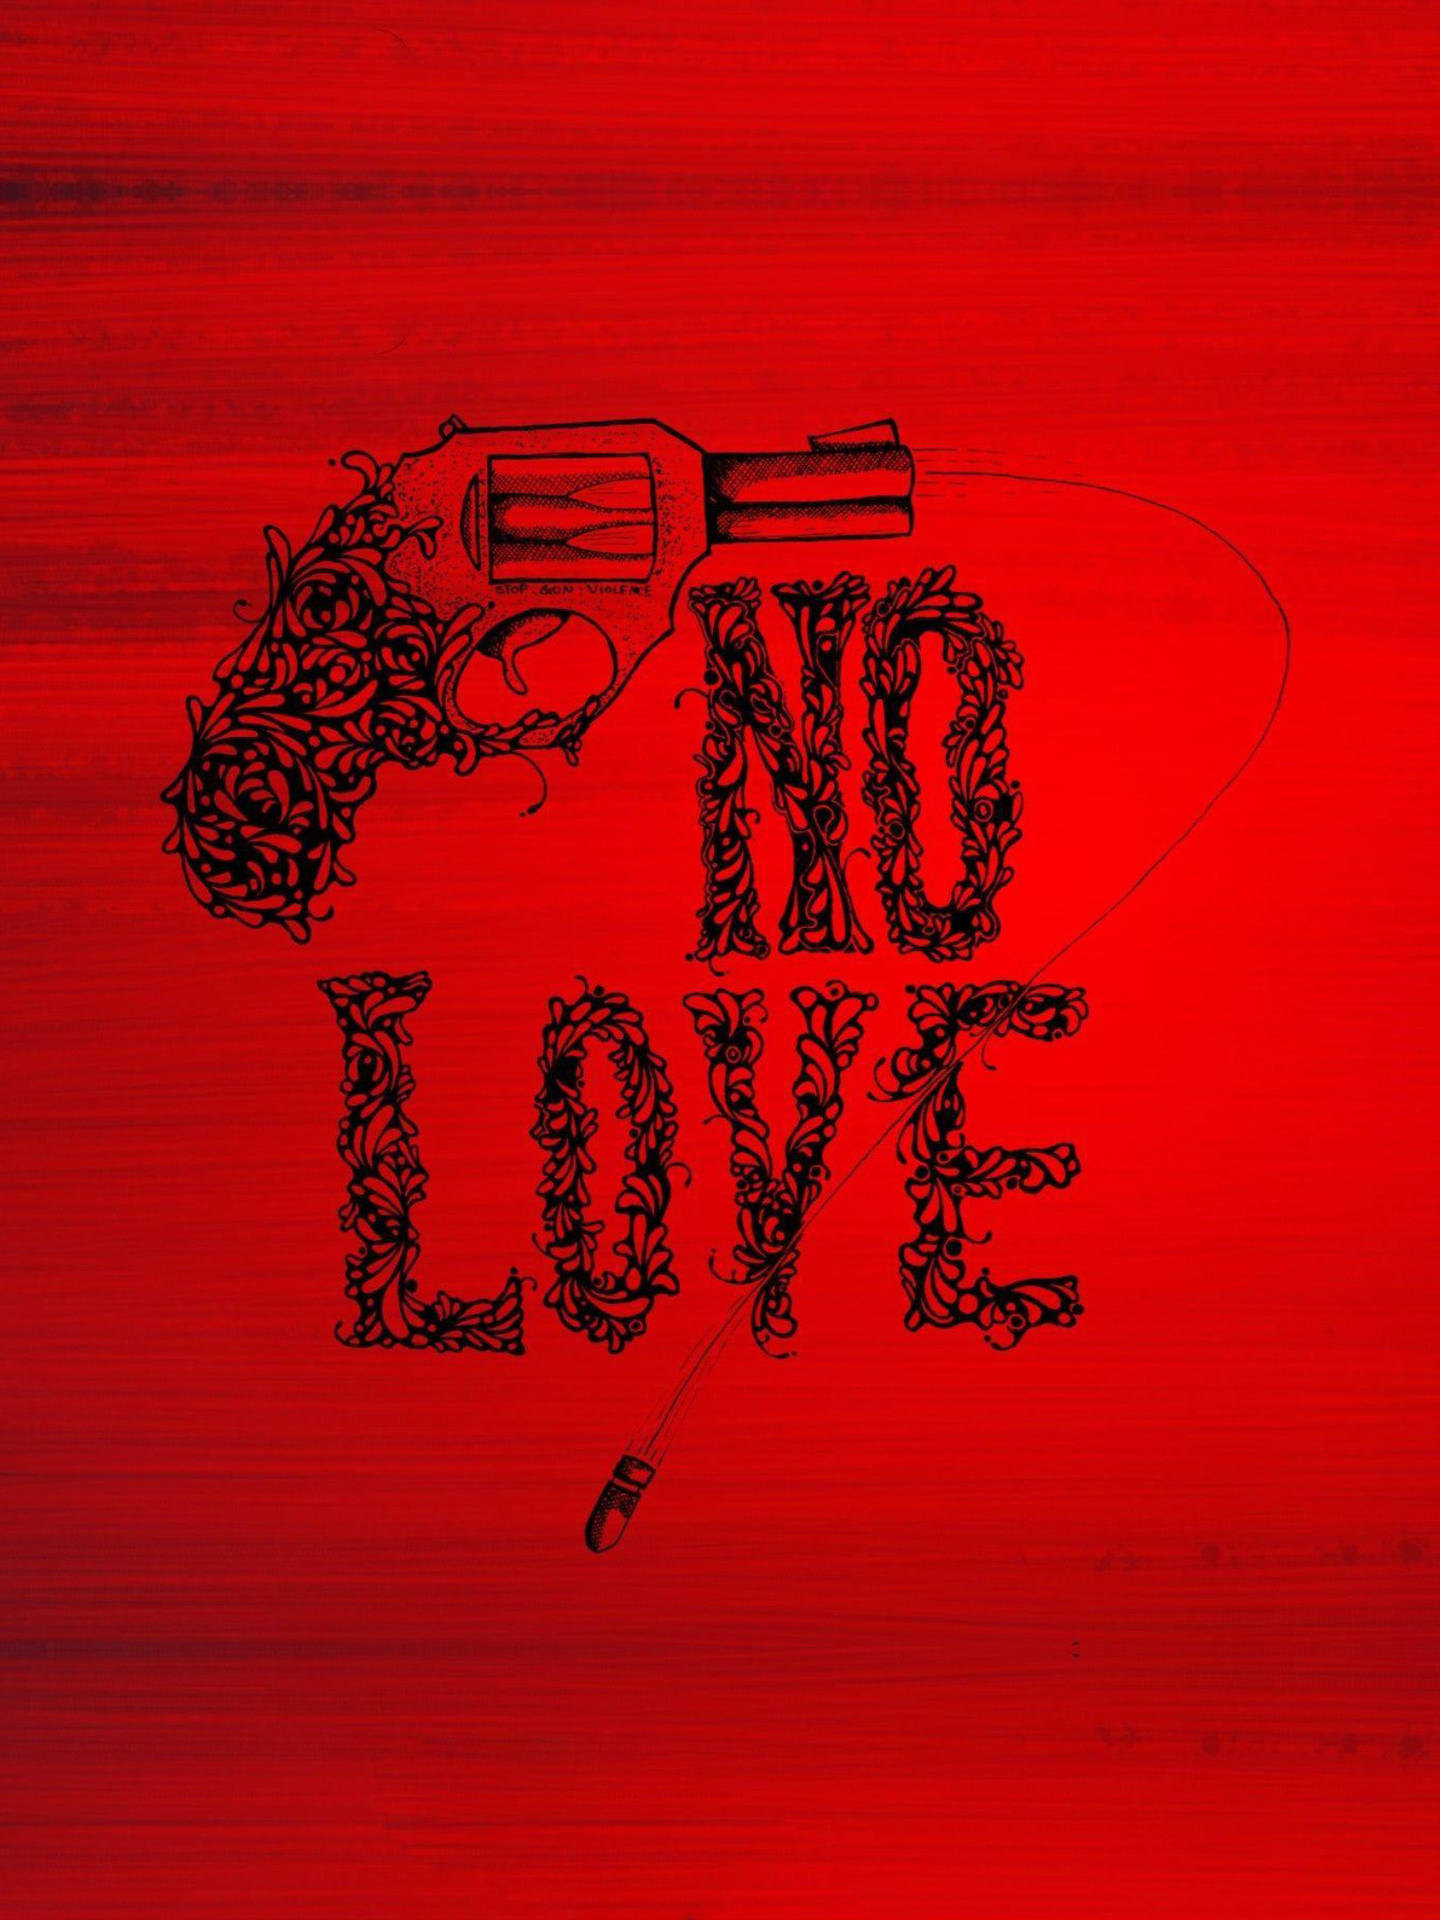 No Love With Revolver Pistol Background